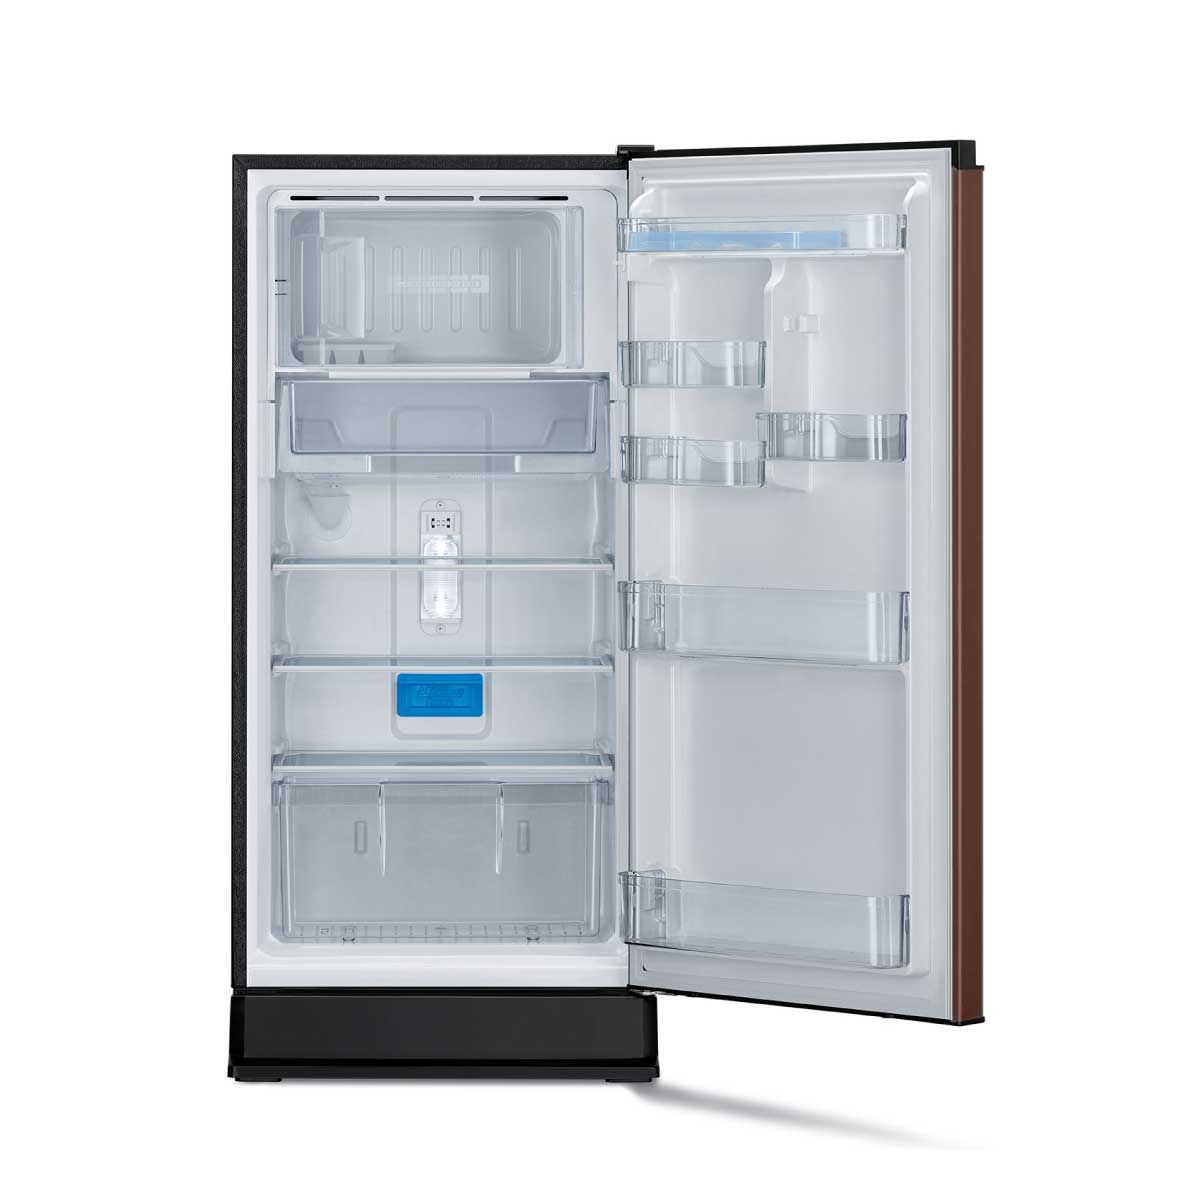 MITSUBISHI ELECTRIC ตู้เย็น1ประตูJ-SMART DEFROST 6.1Q สีน้ำตาล รุ่น MR-18TJA/BR